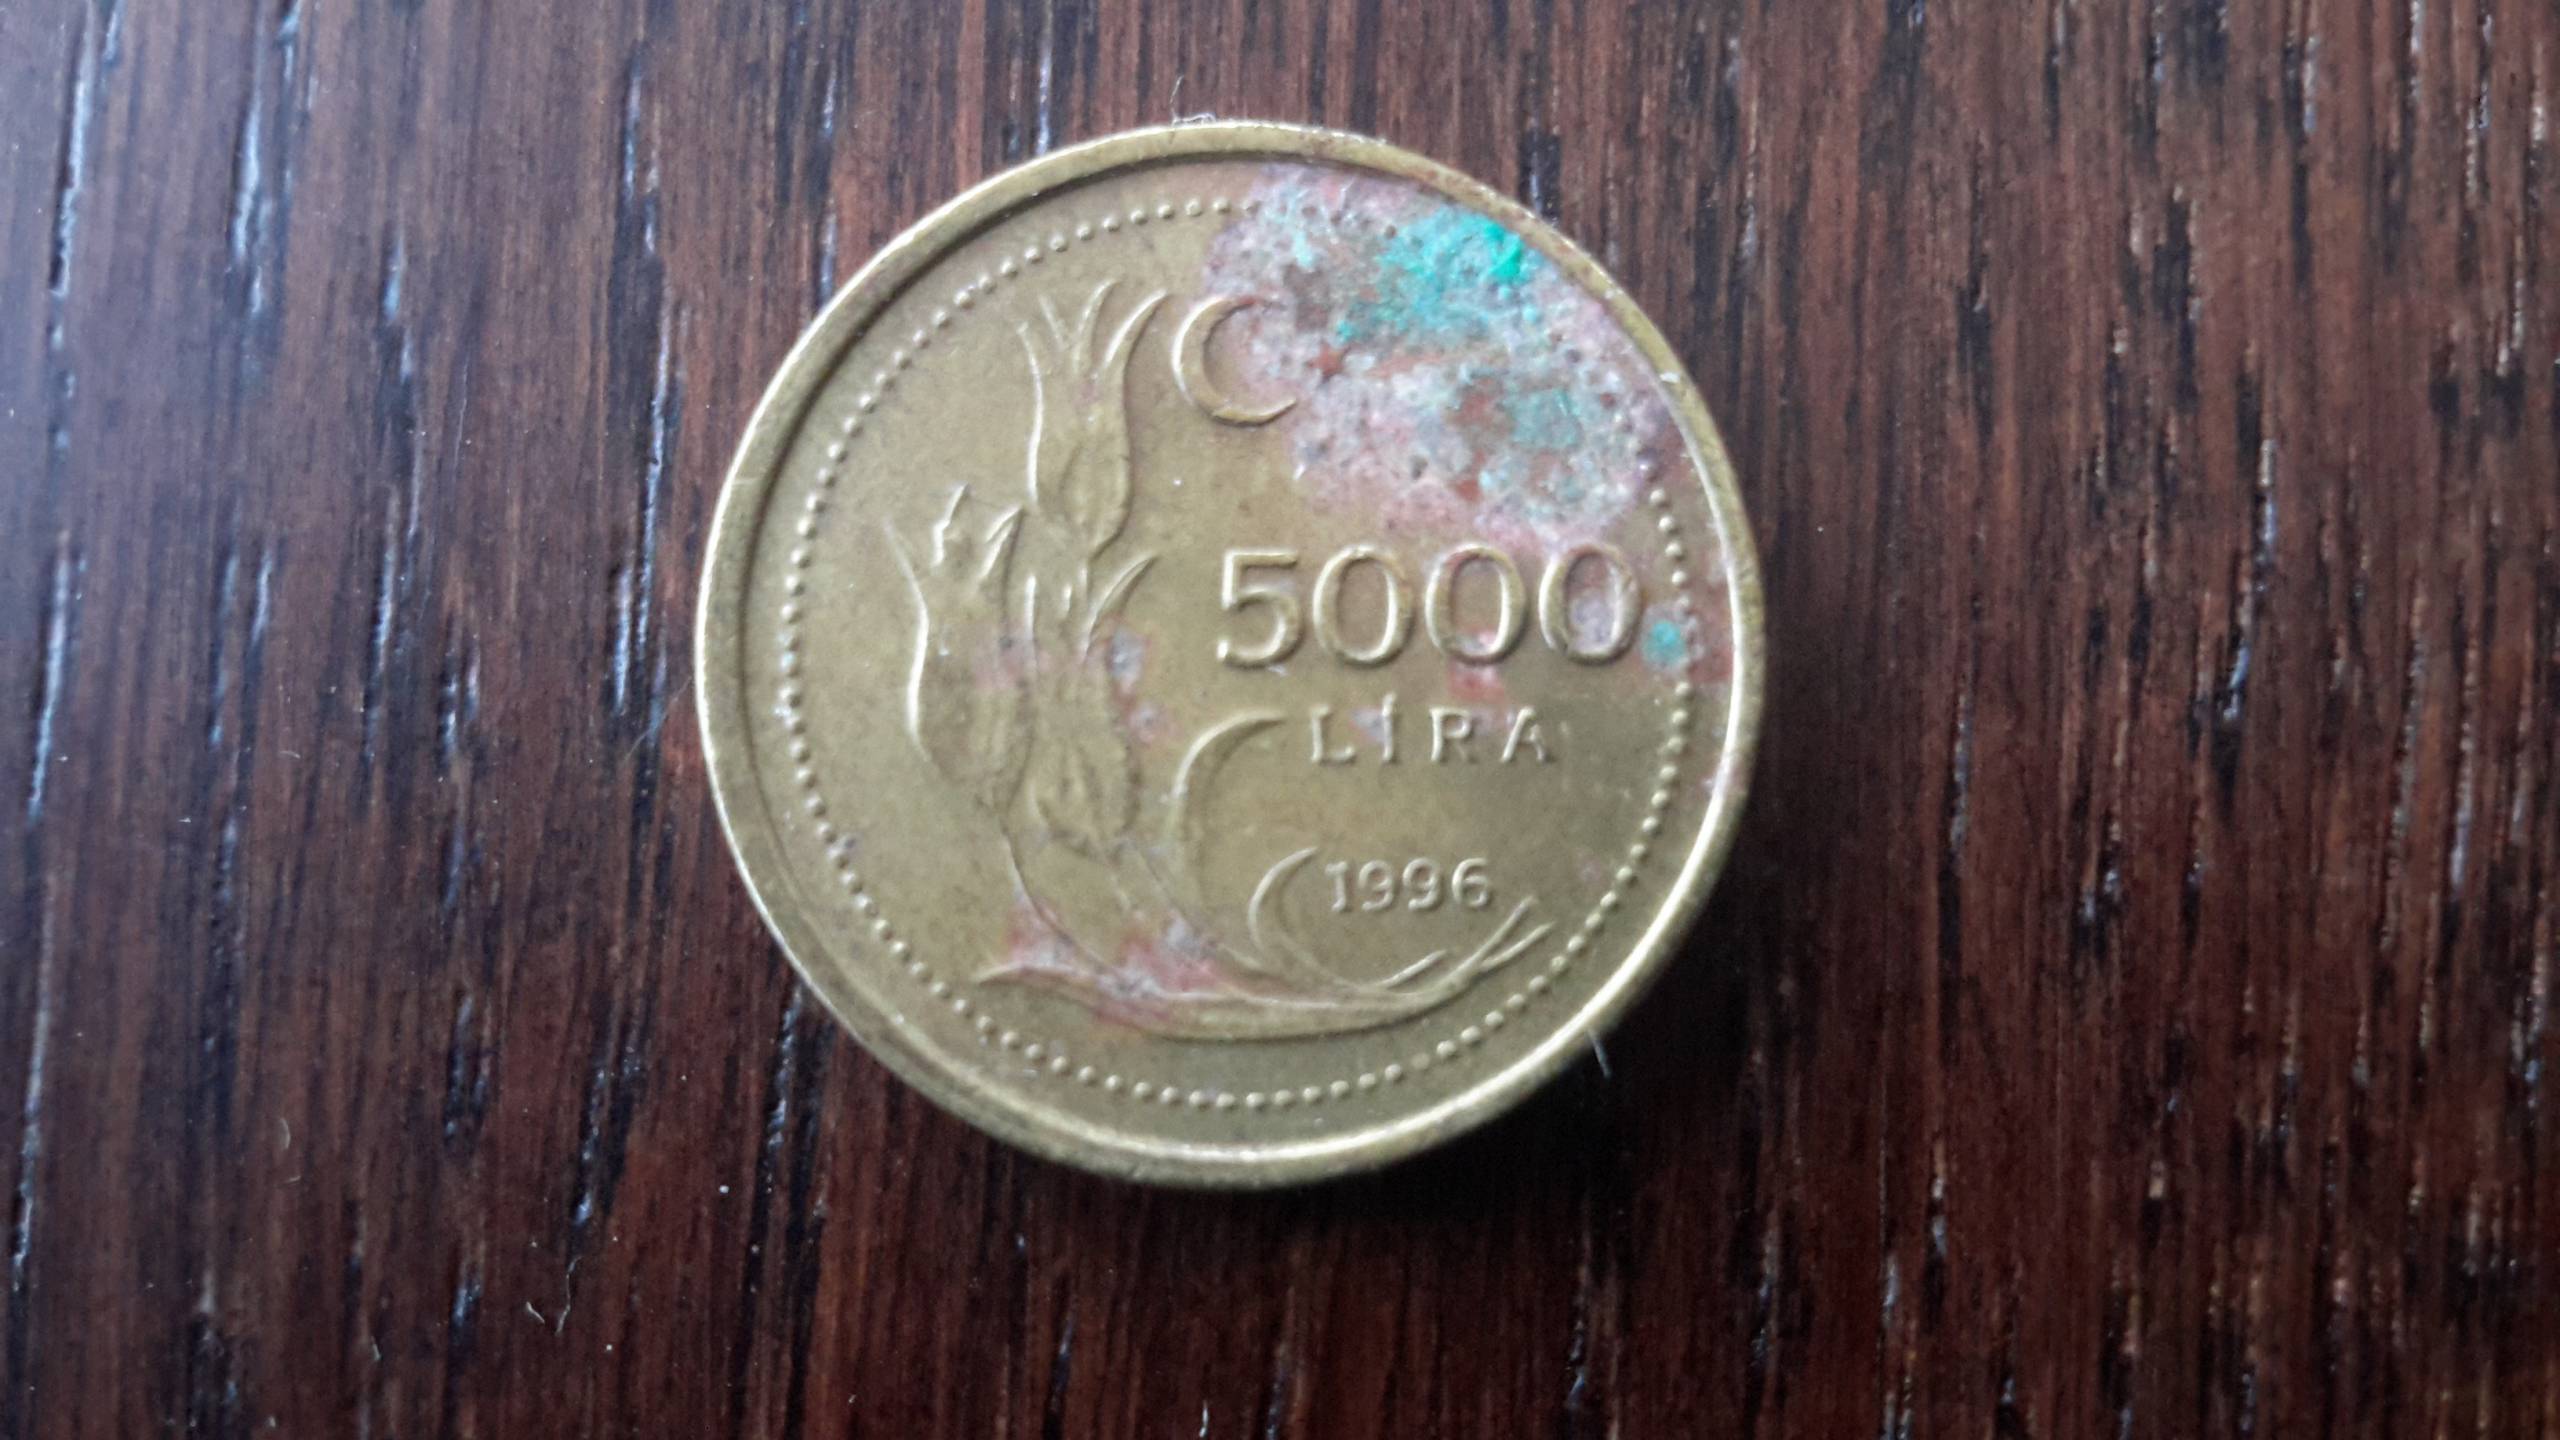 105 лир в рублях. Монета turkiye Cumhuriyeti c 5000 lira 1996 года.